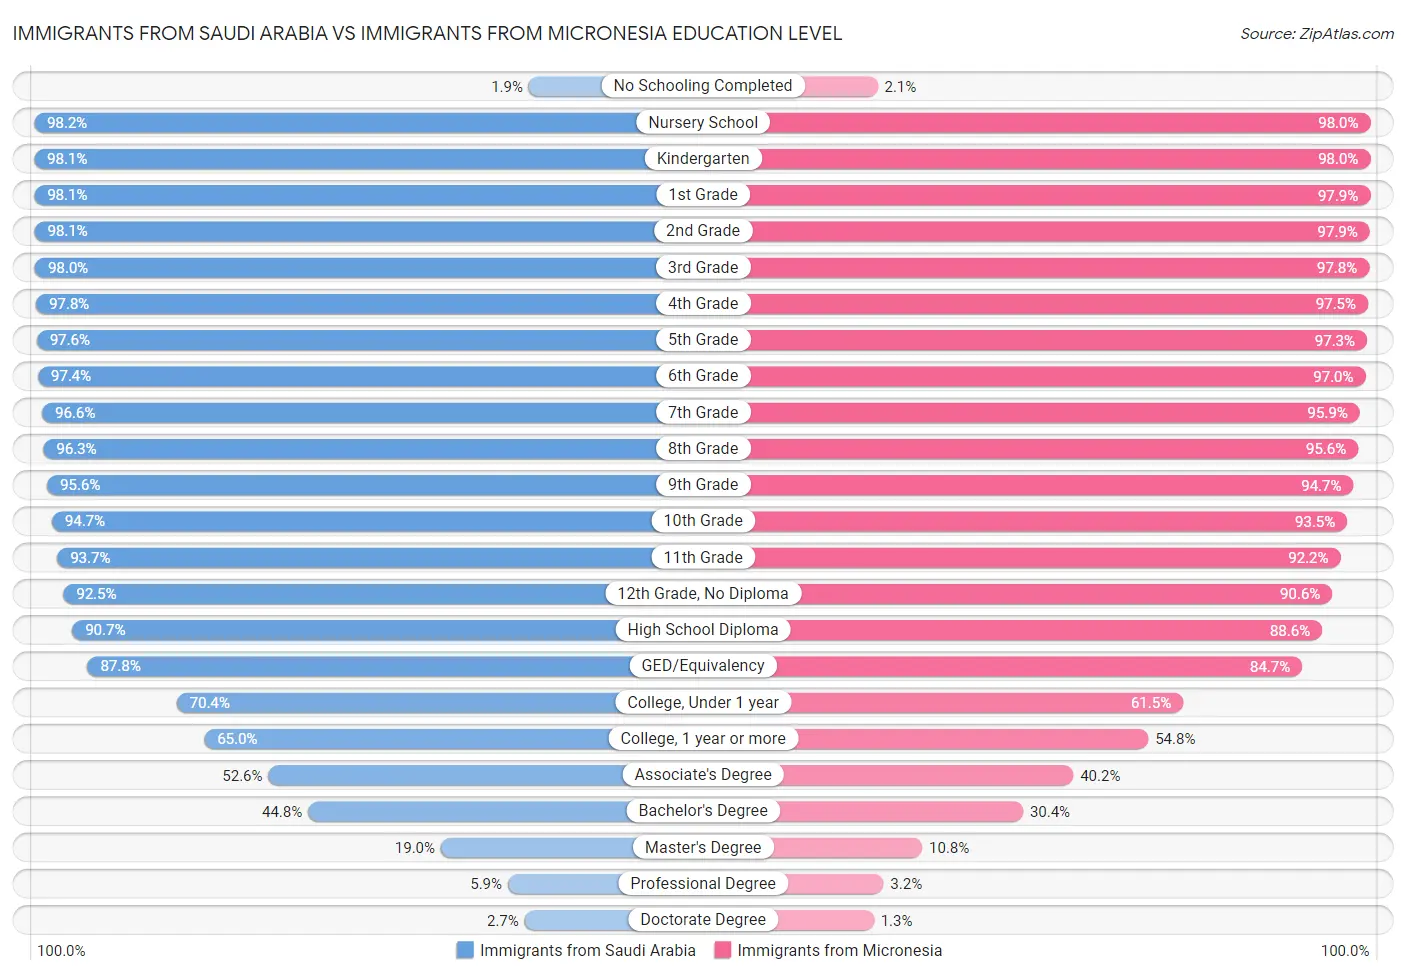 Immigrants from Saudi Arabia vs Immigrants from Micronesia Education Level